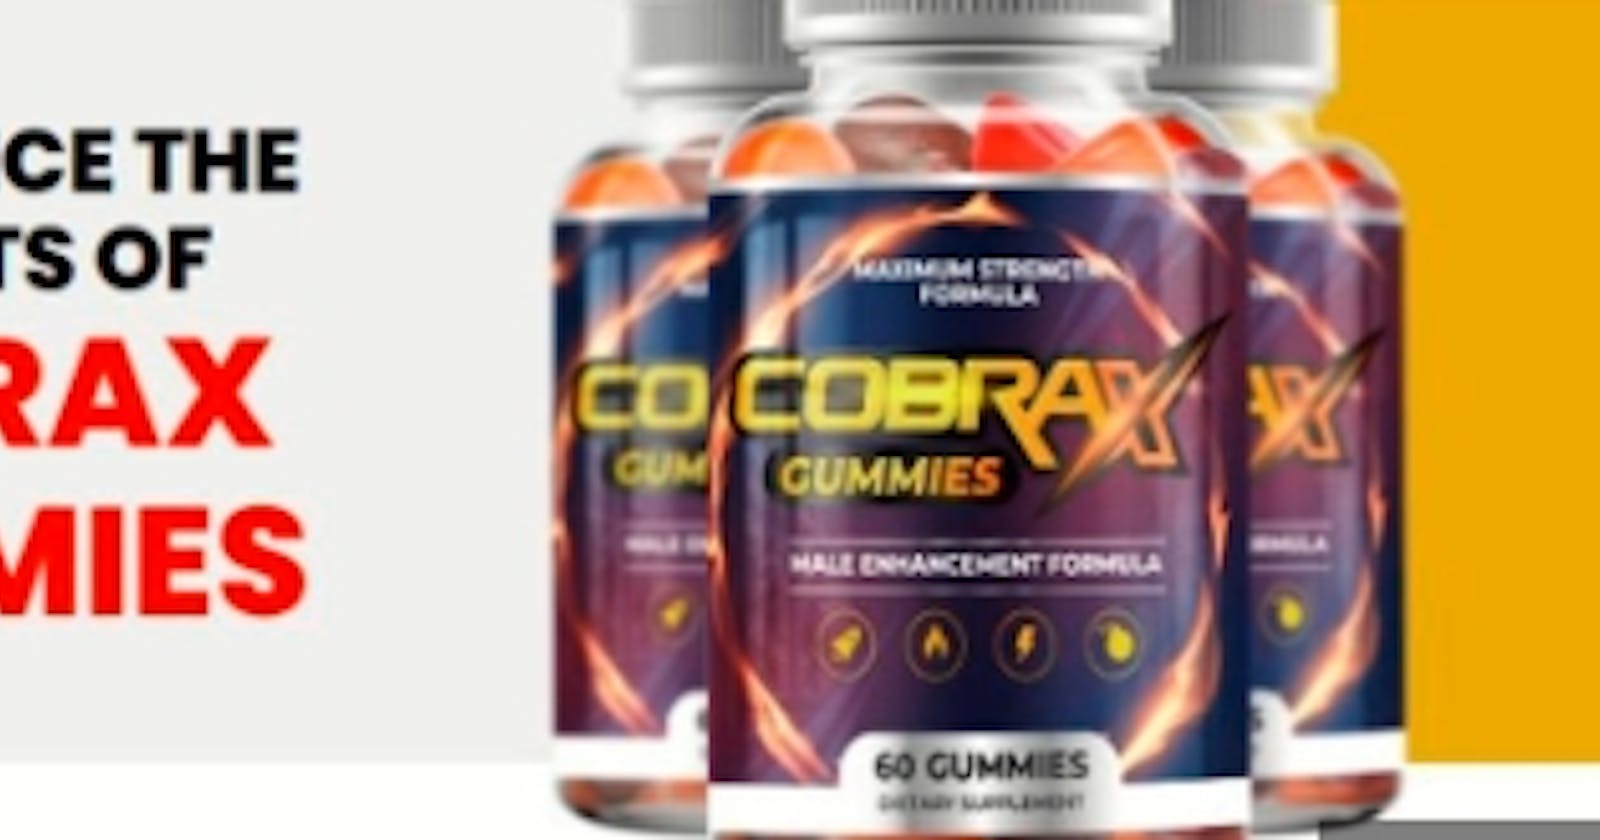 Cobrax Male Enhancement Gummies Reviews: Boost Your Sexual Performance & Manhood Insane